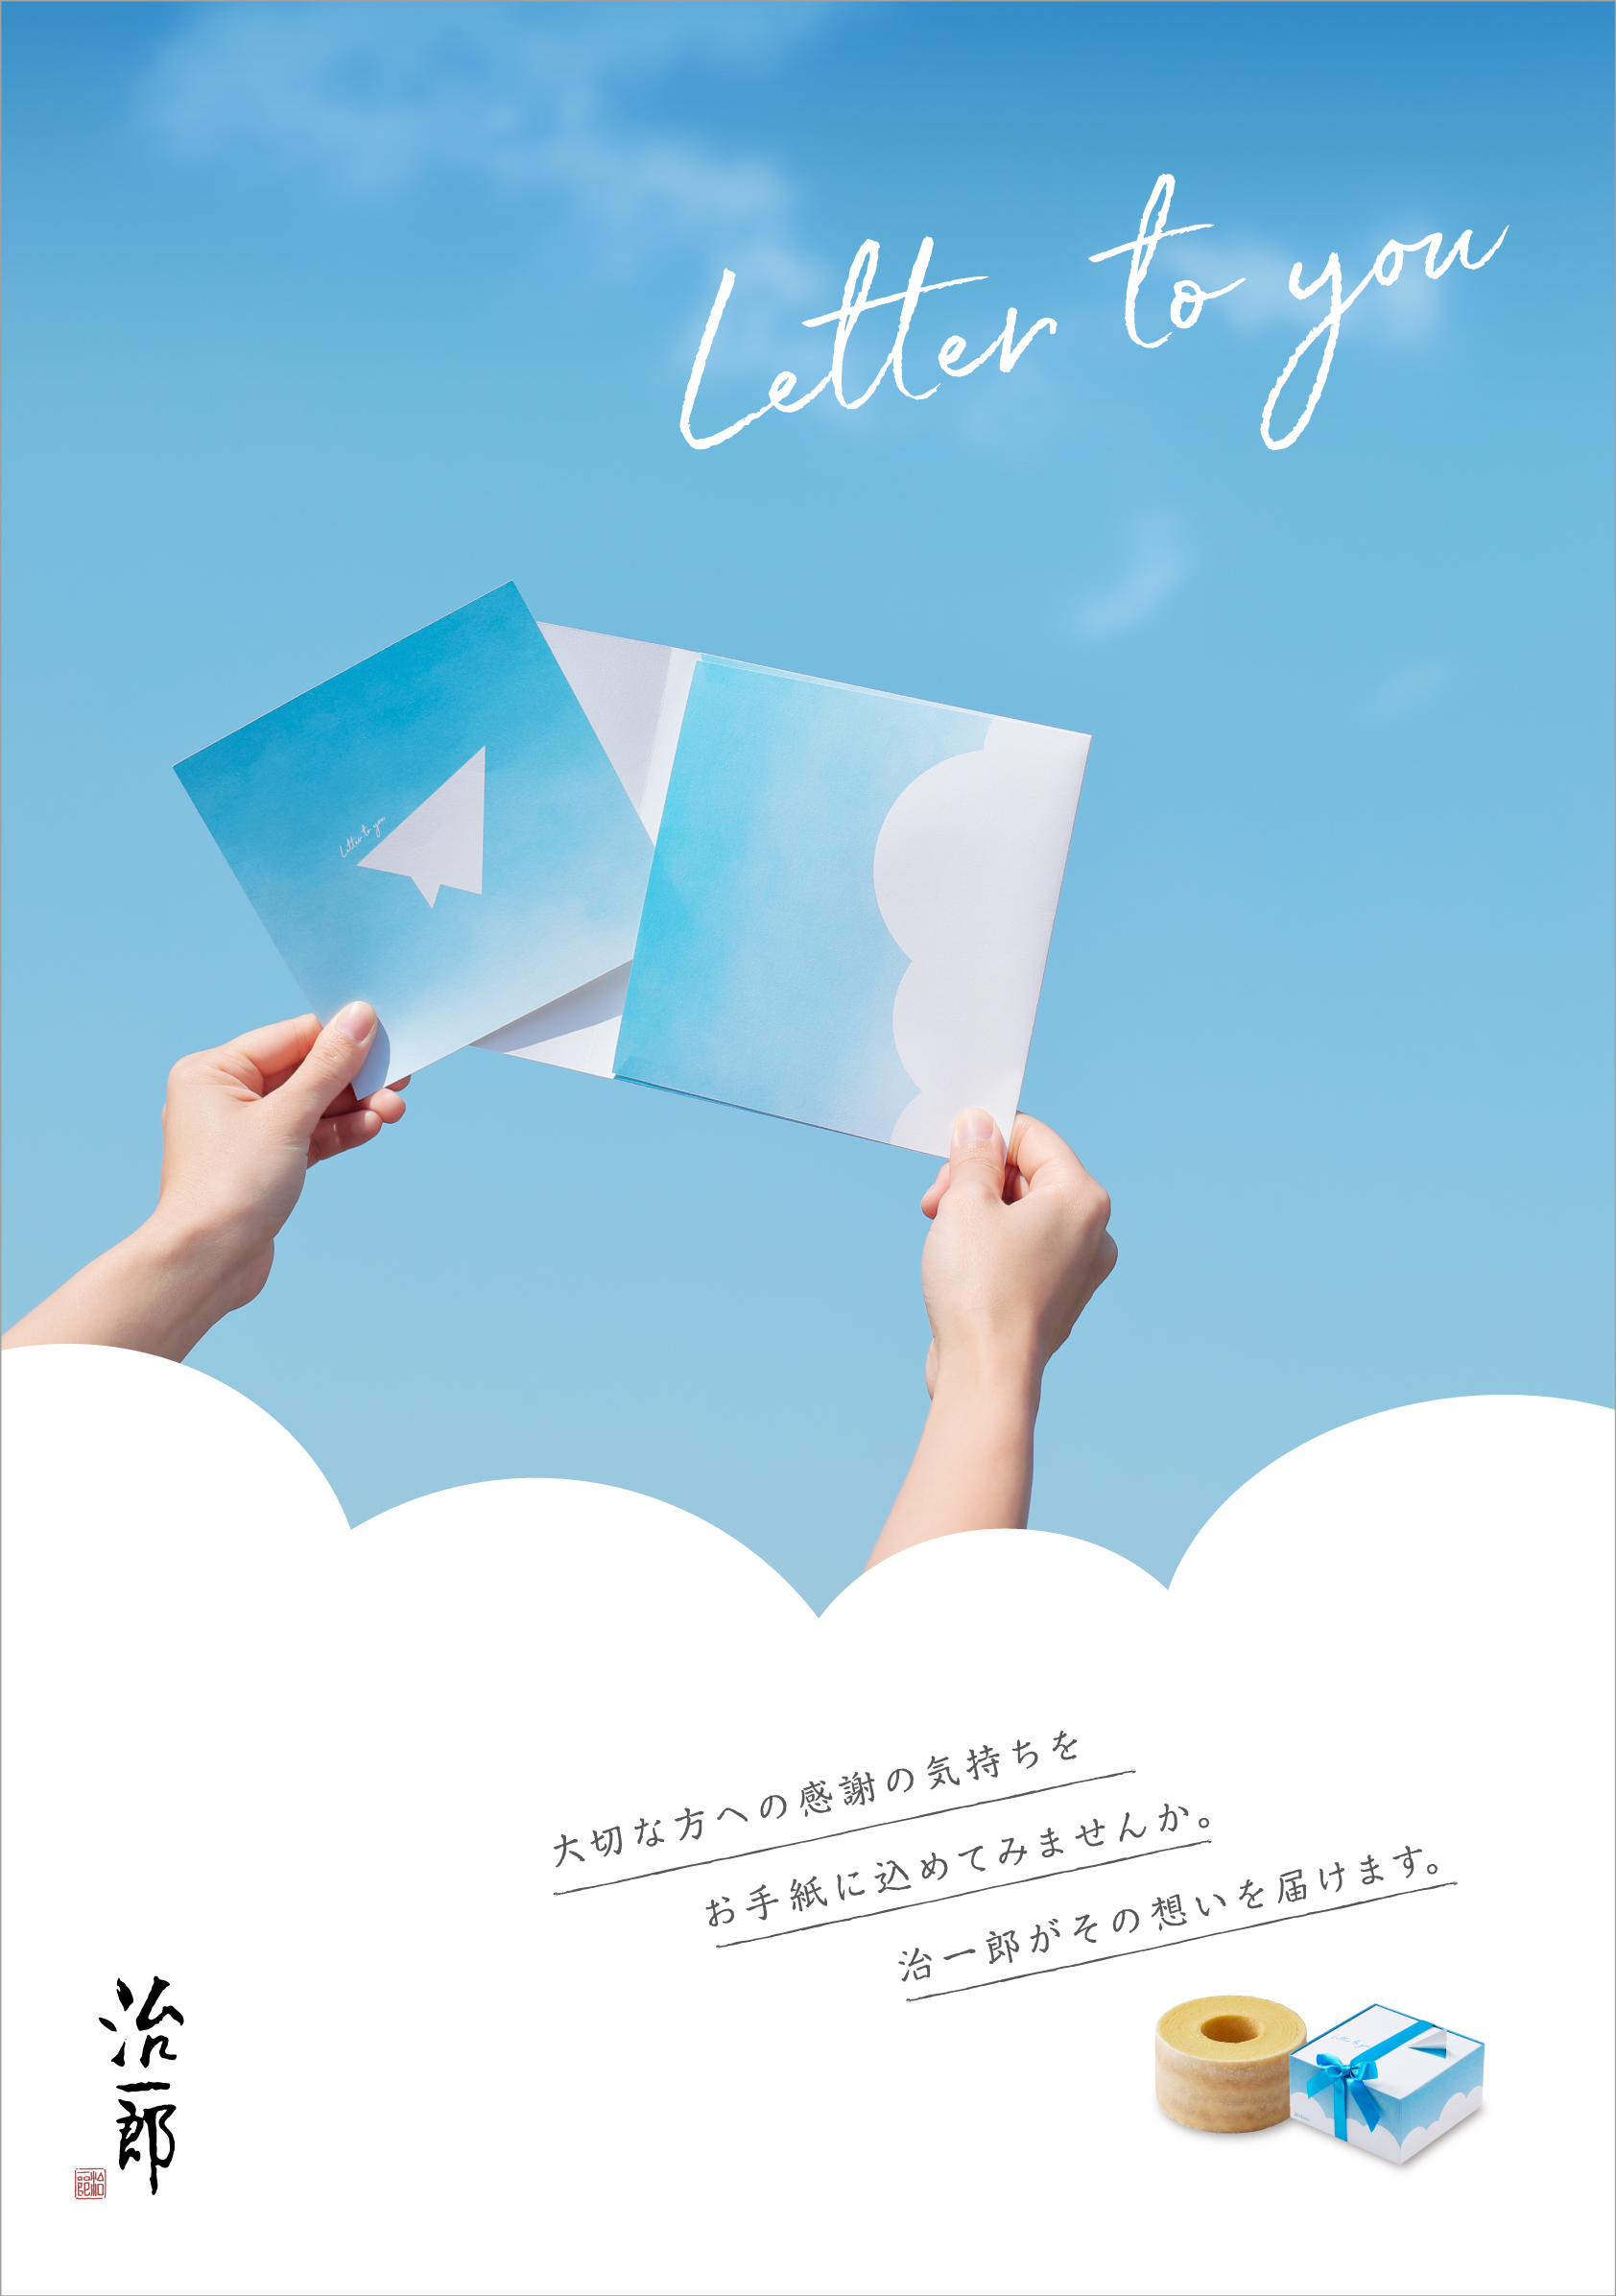 poster Jiichiro Letter To You 2019